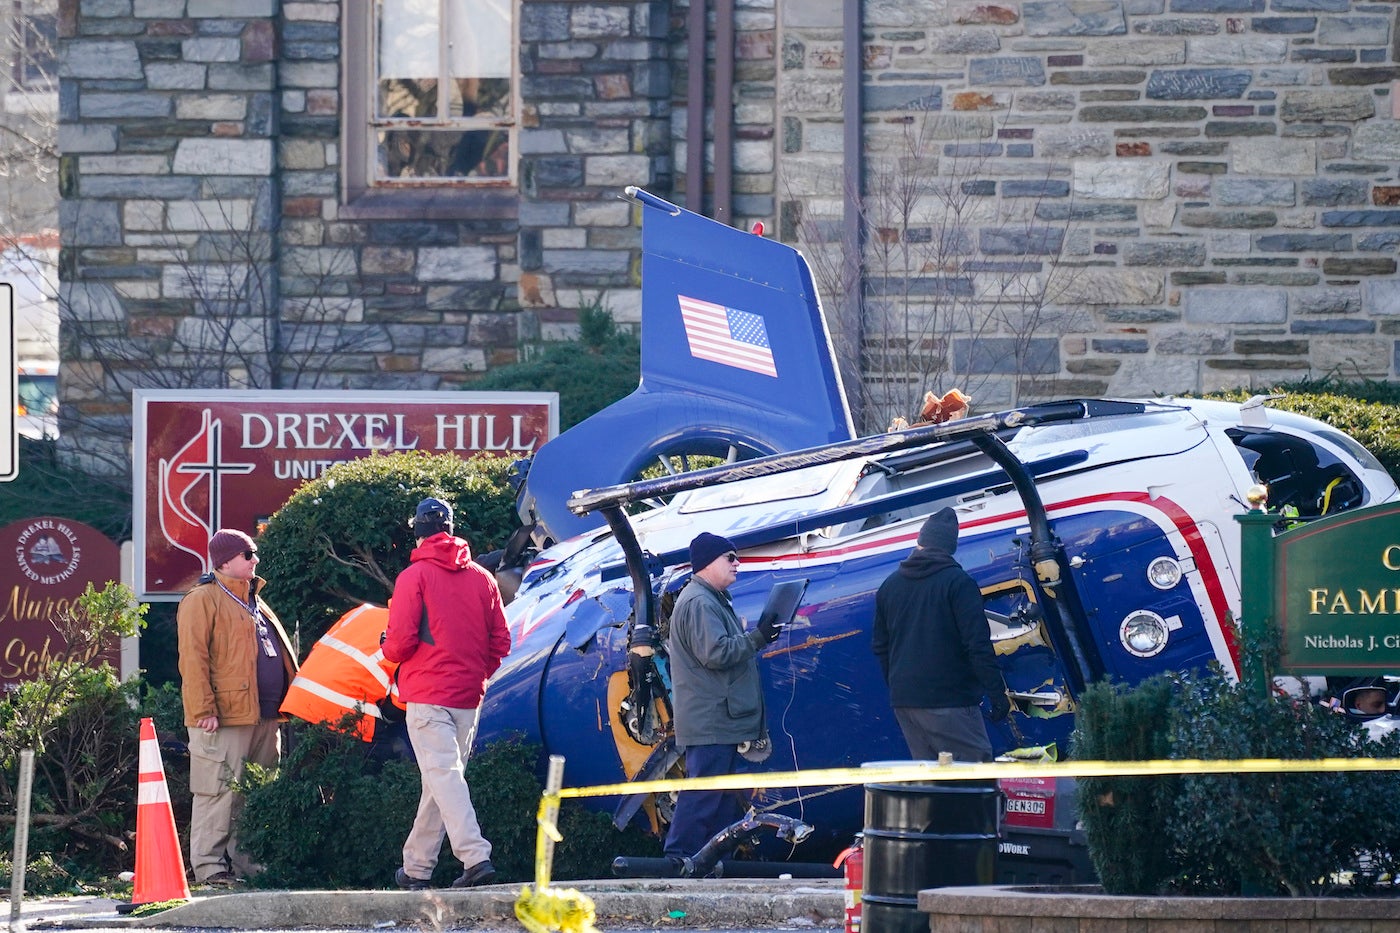 NTSB investigating medical helicopter crash in Drexel Hill - WHYY